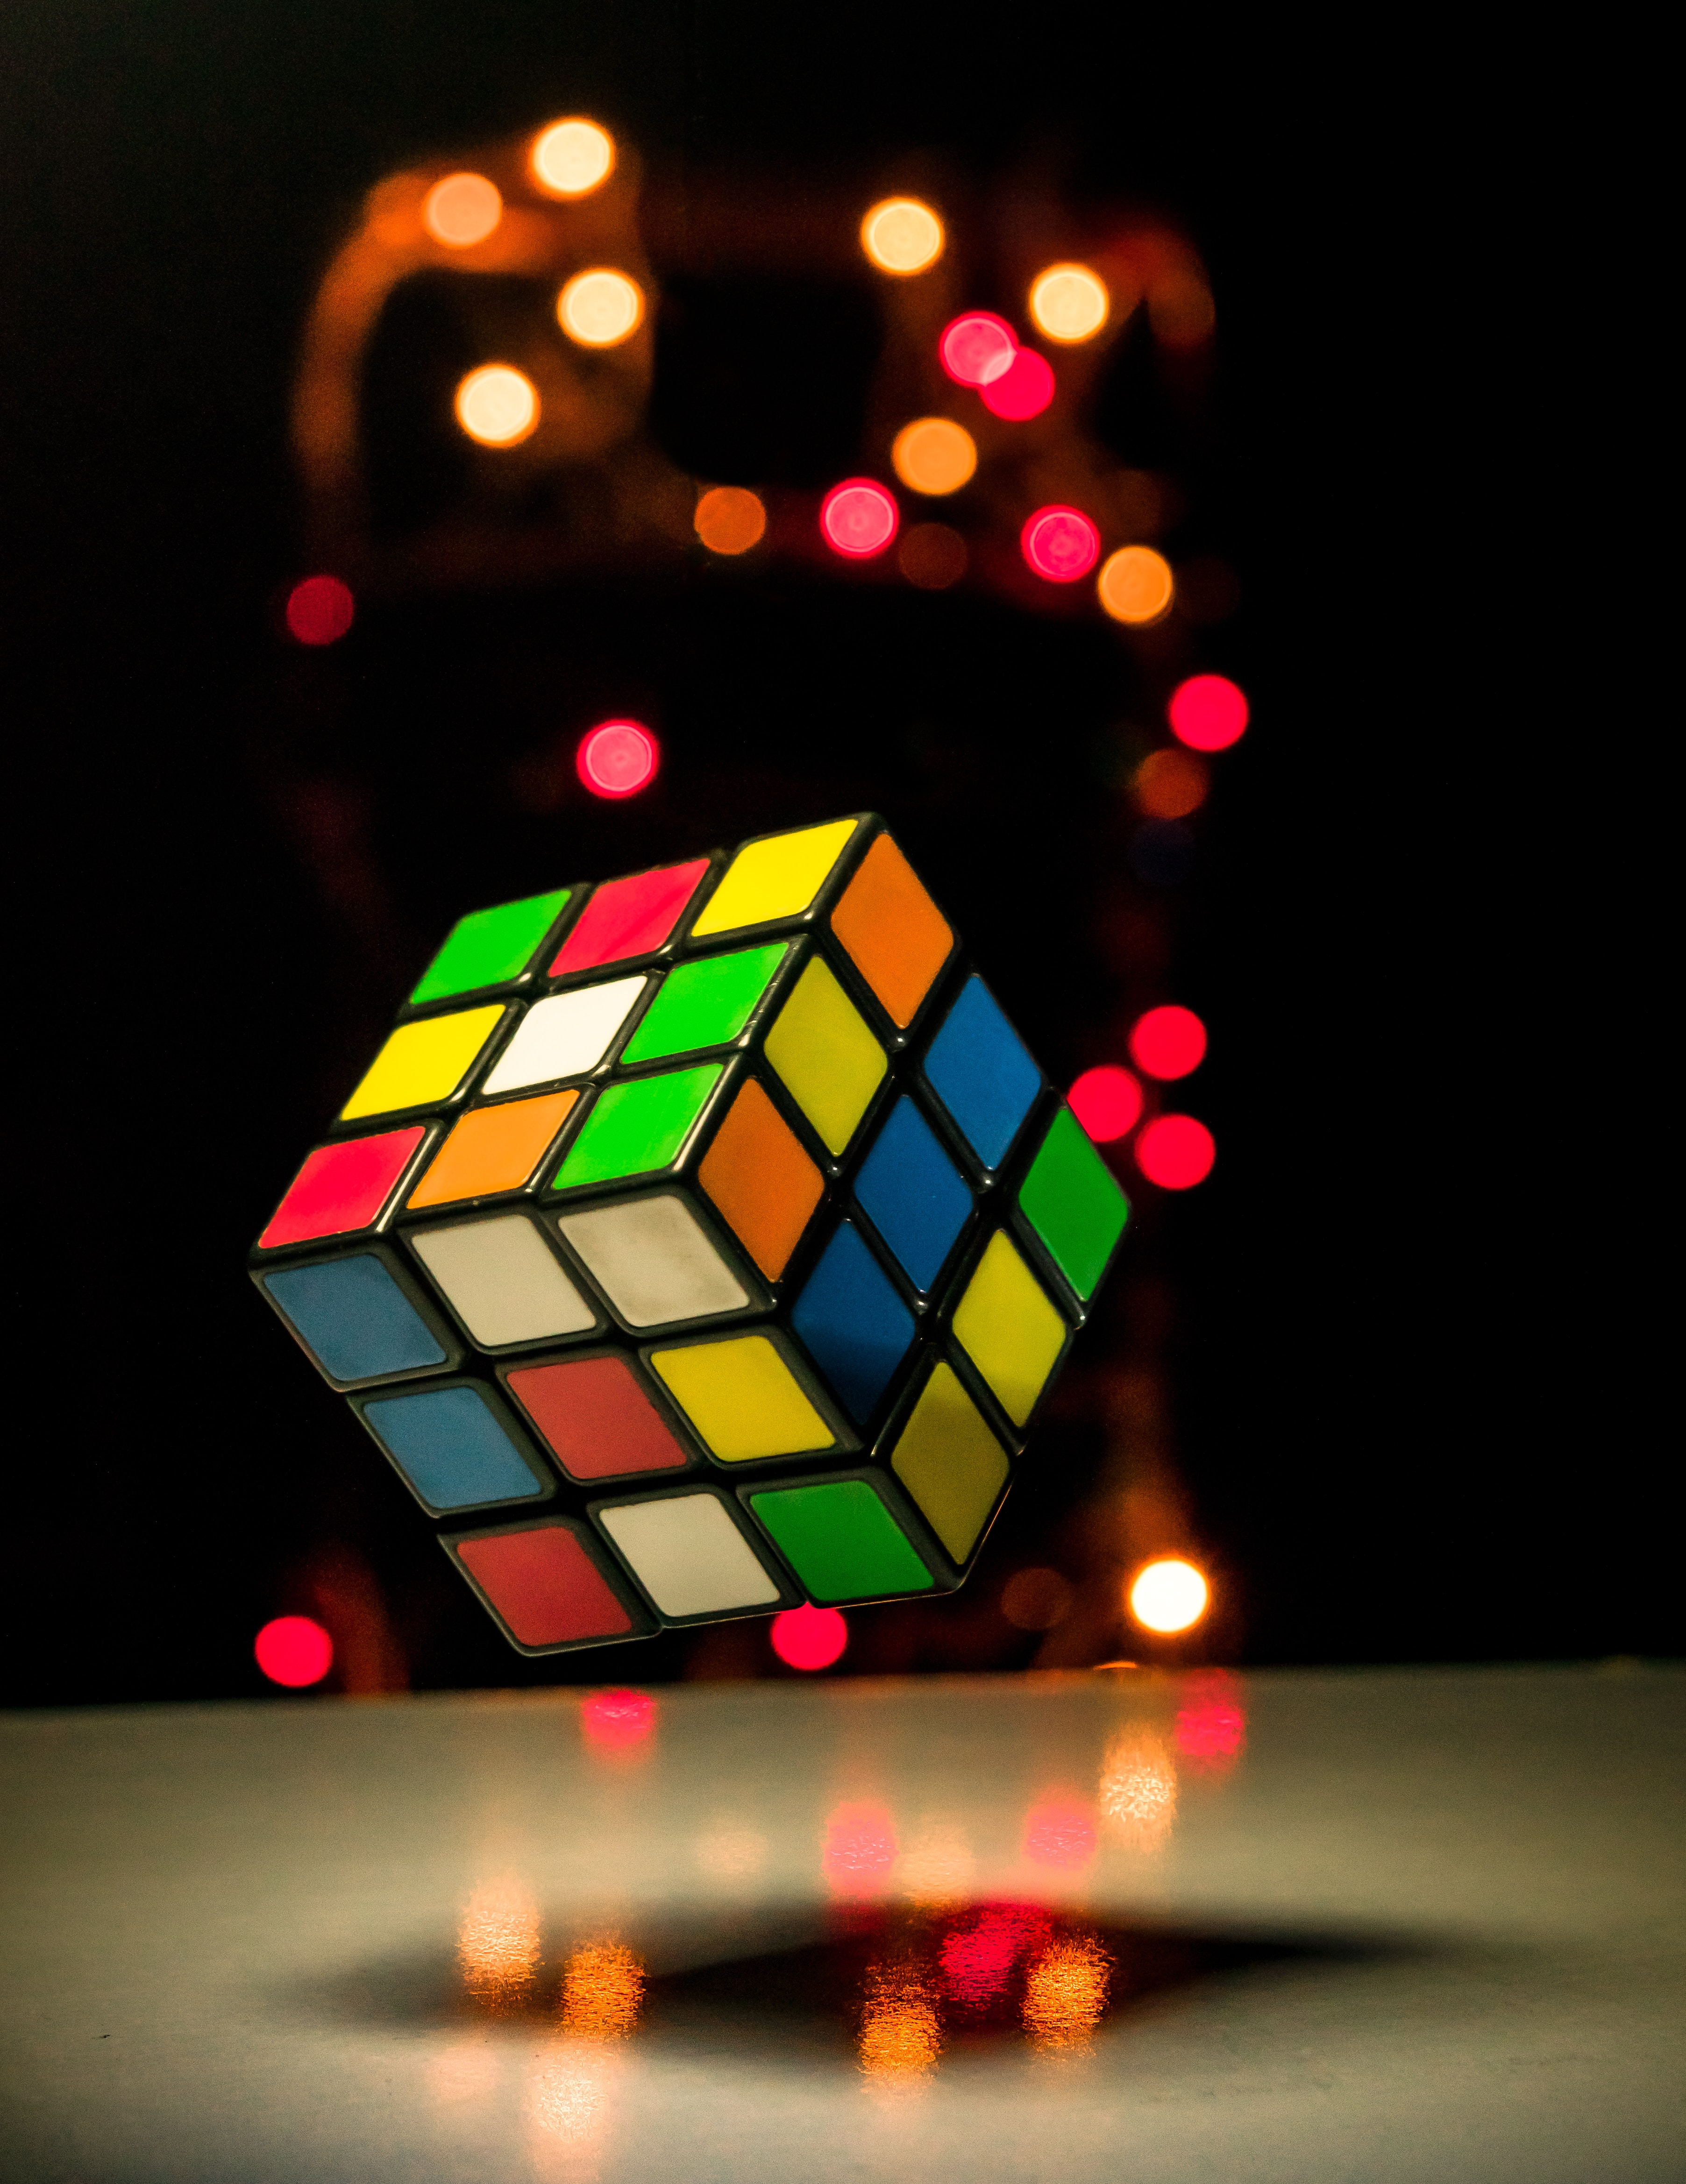 1080p pic rubik's cube, cube, lights, miscellanea